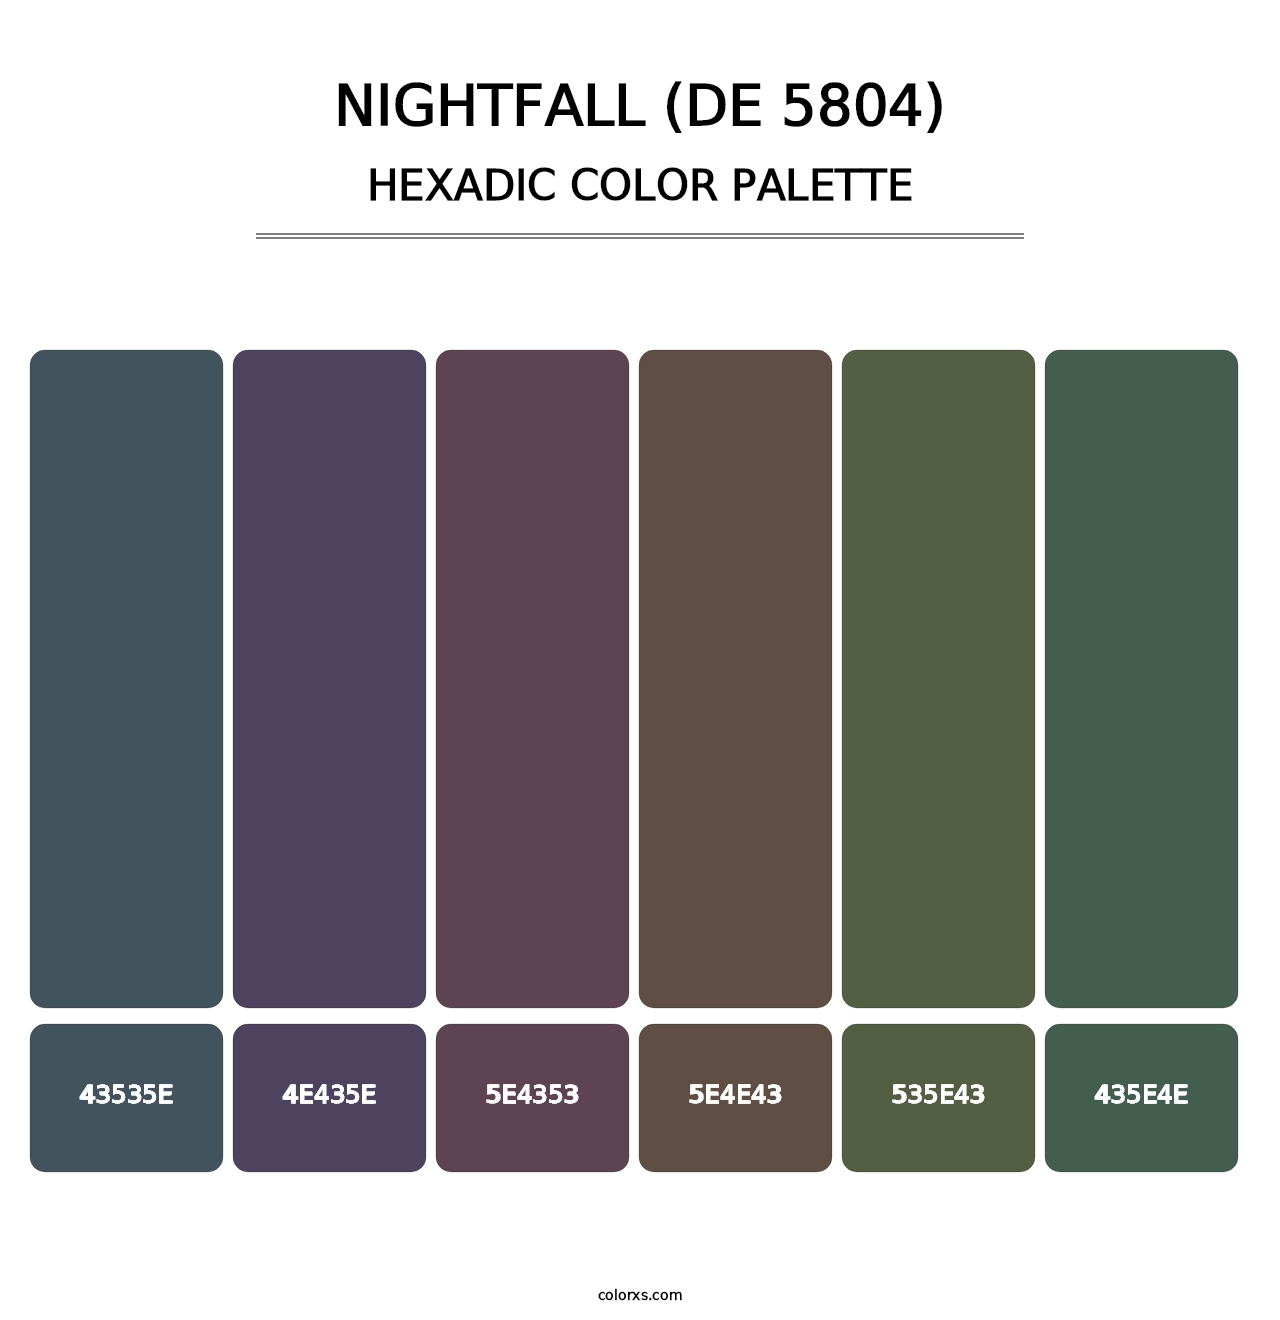 Nightfall (DE 5804) - Hexadic Color Palette